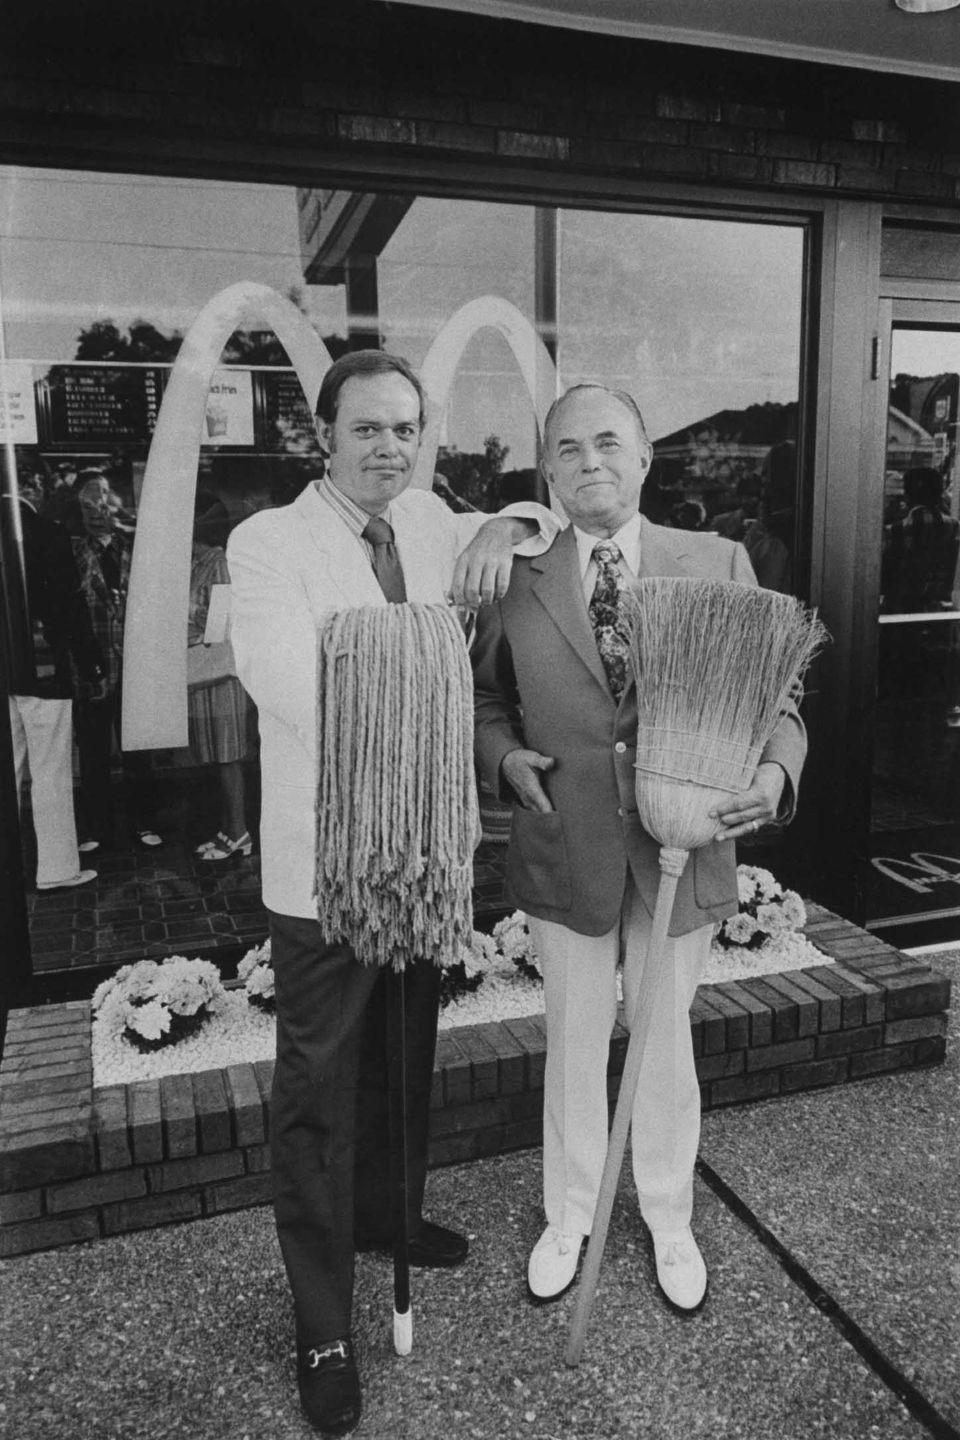 1973: The 2,500th McDonald's